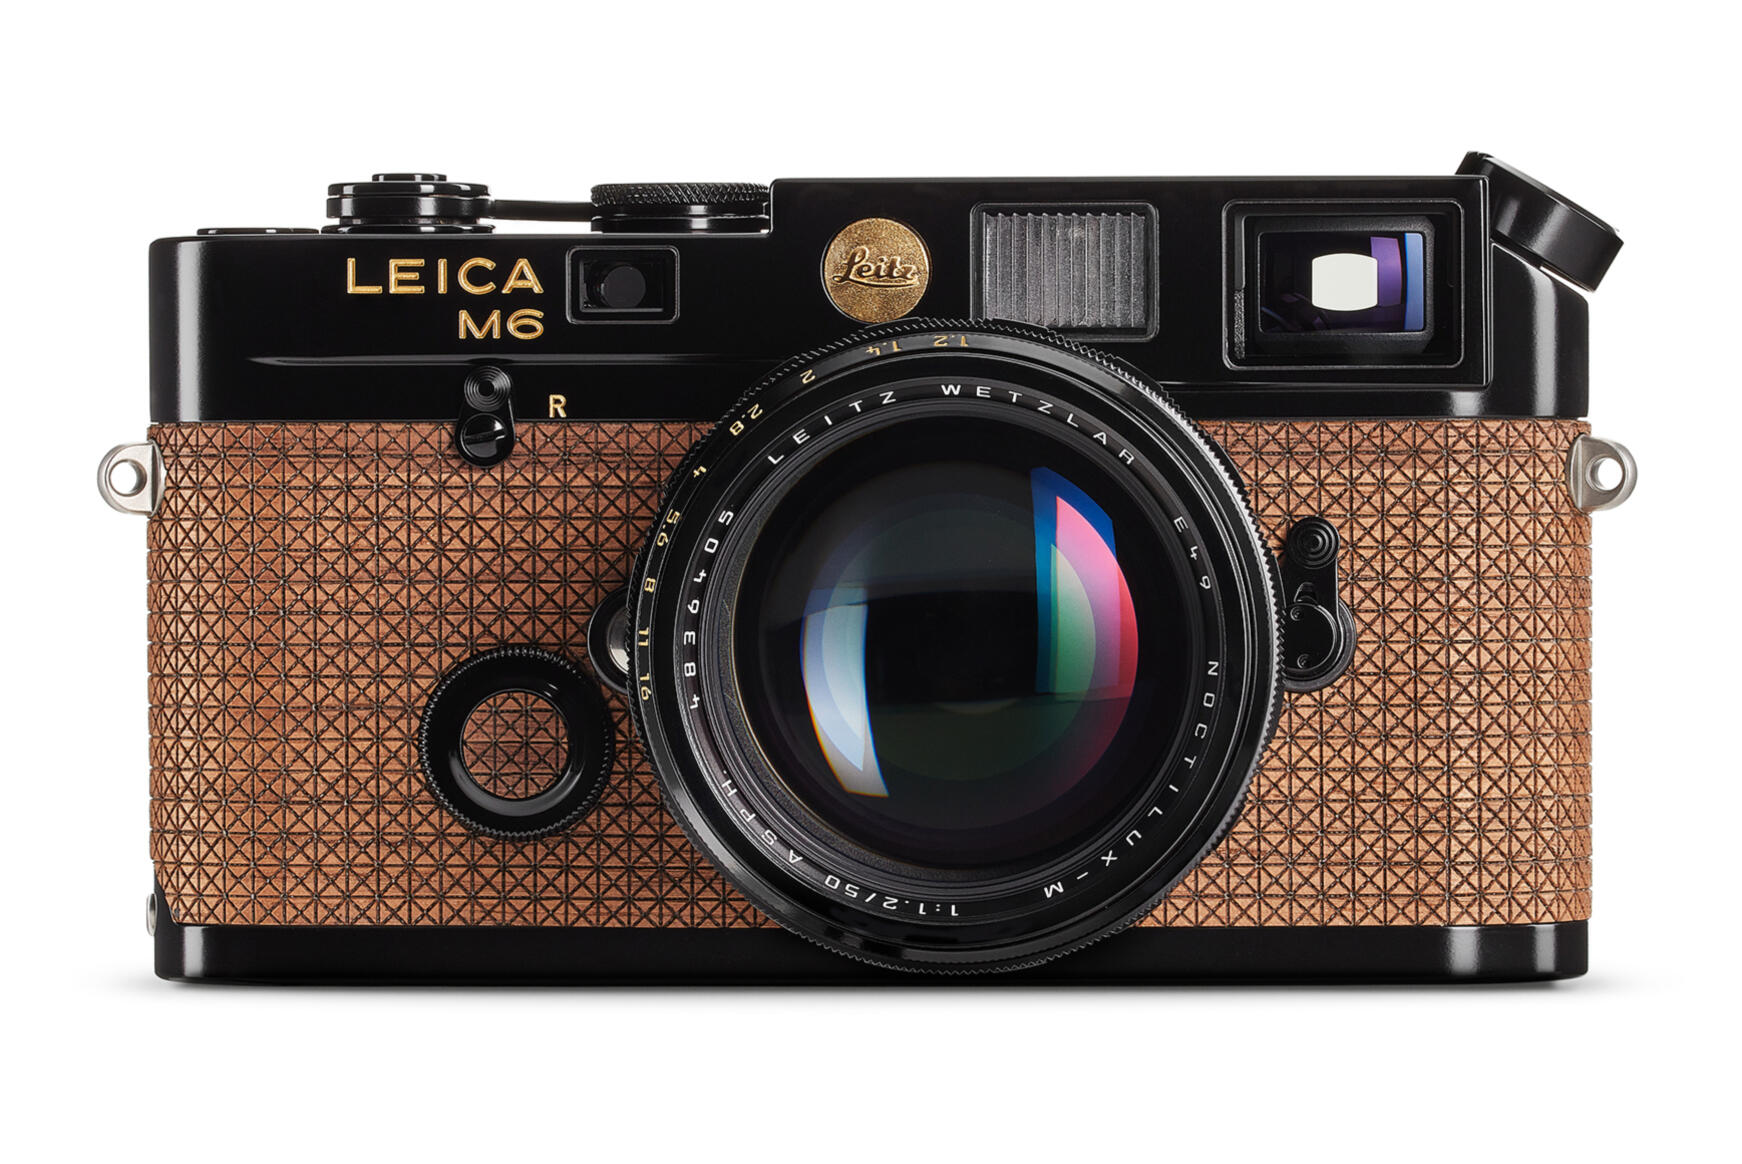 New Leica M6 “Leitz Auction” black paint finish limited edition set  announced - Leica Rumors